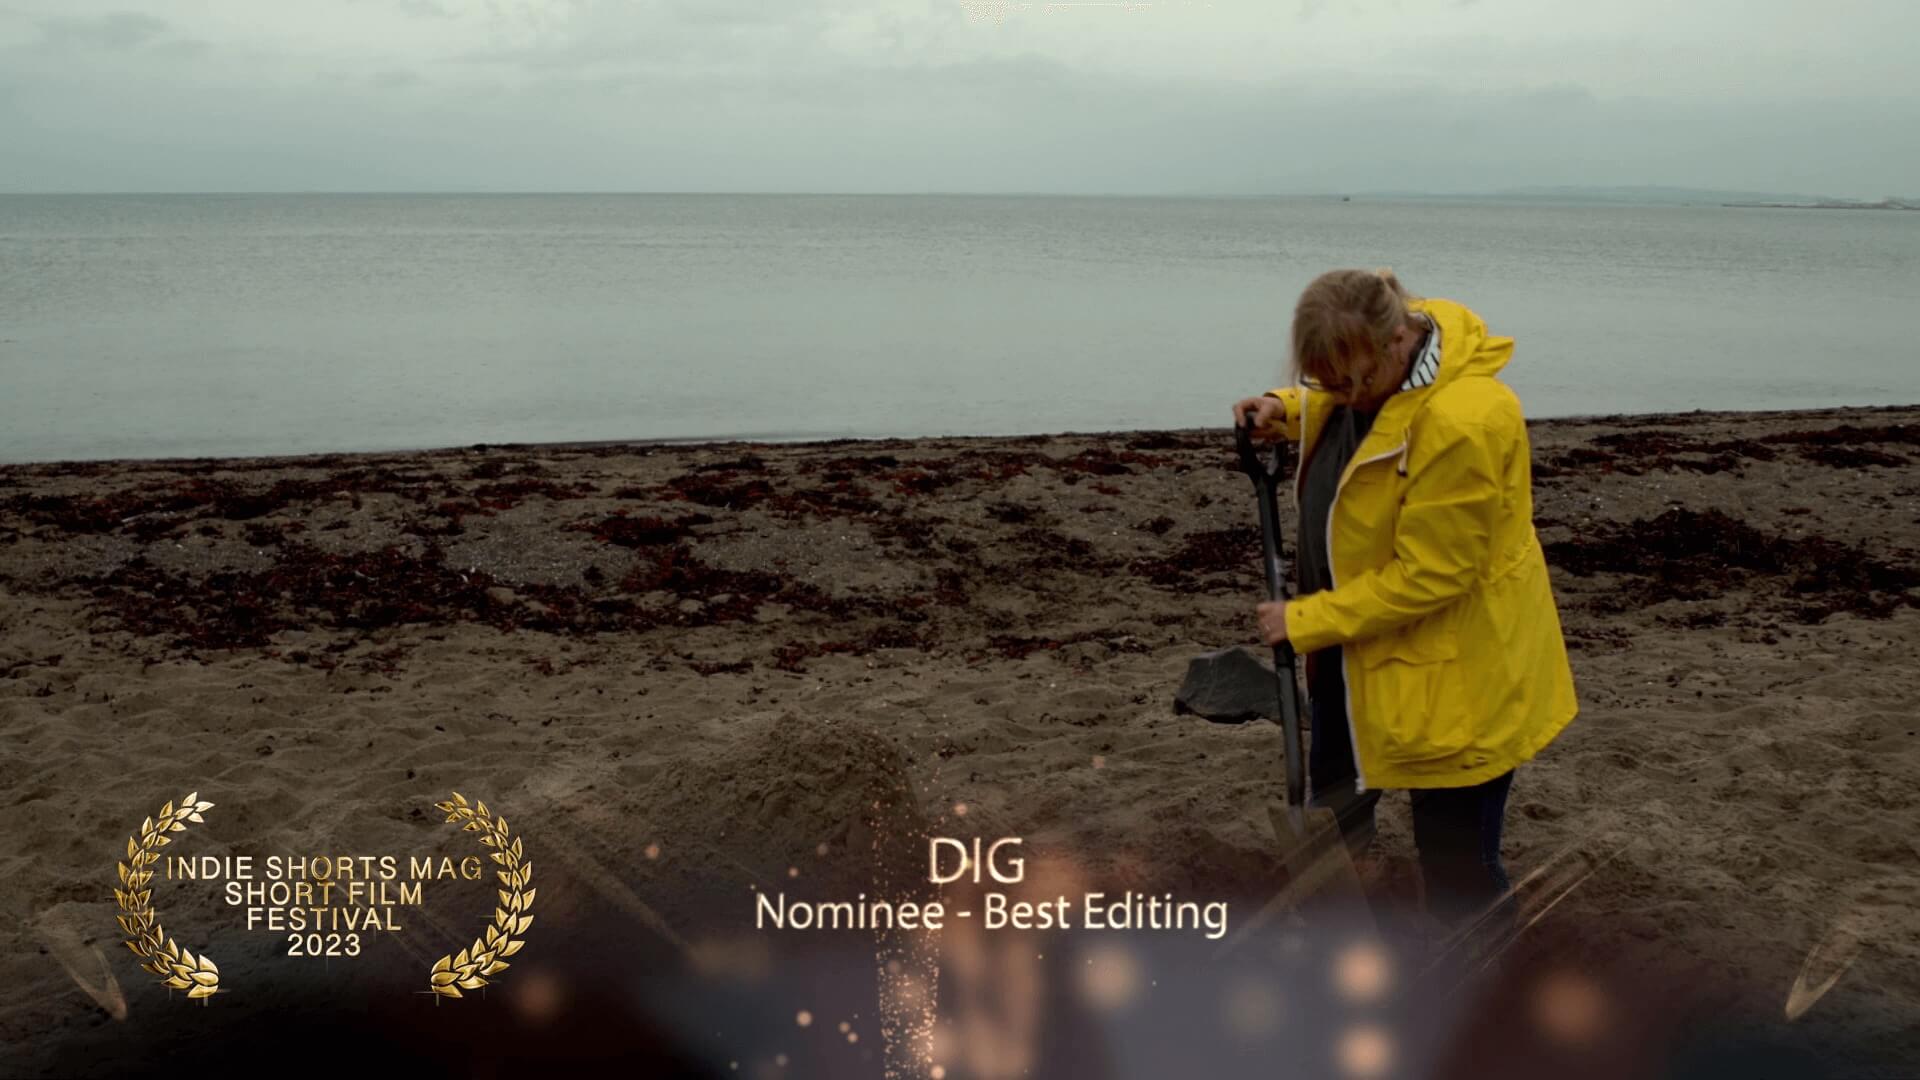 Indie Shorts Mag Short Film Festival - Best Editing - Nominee - DIG